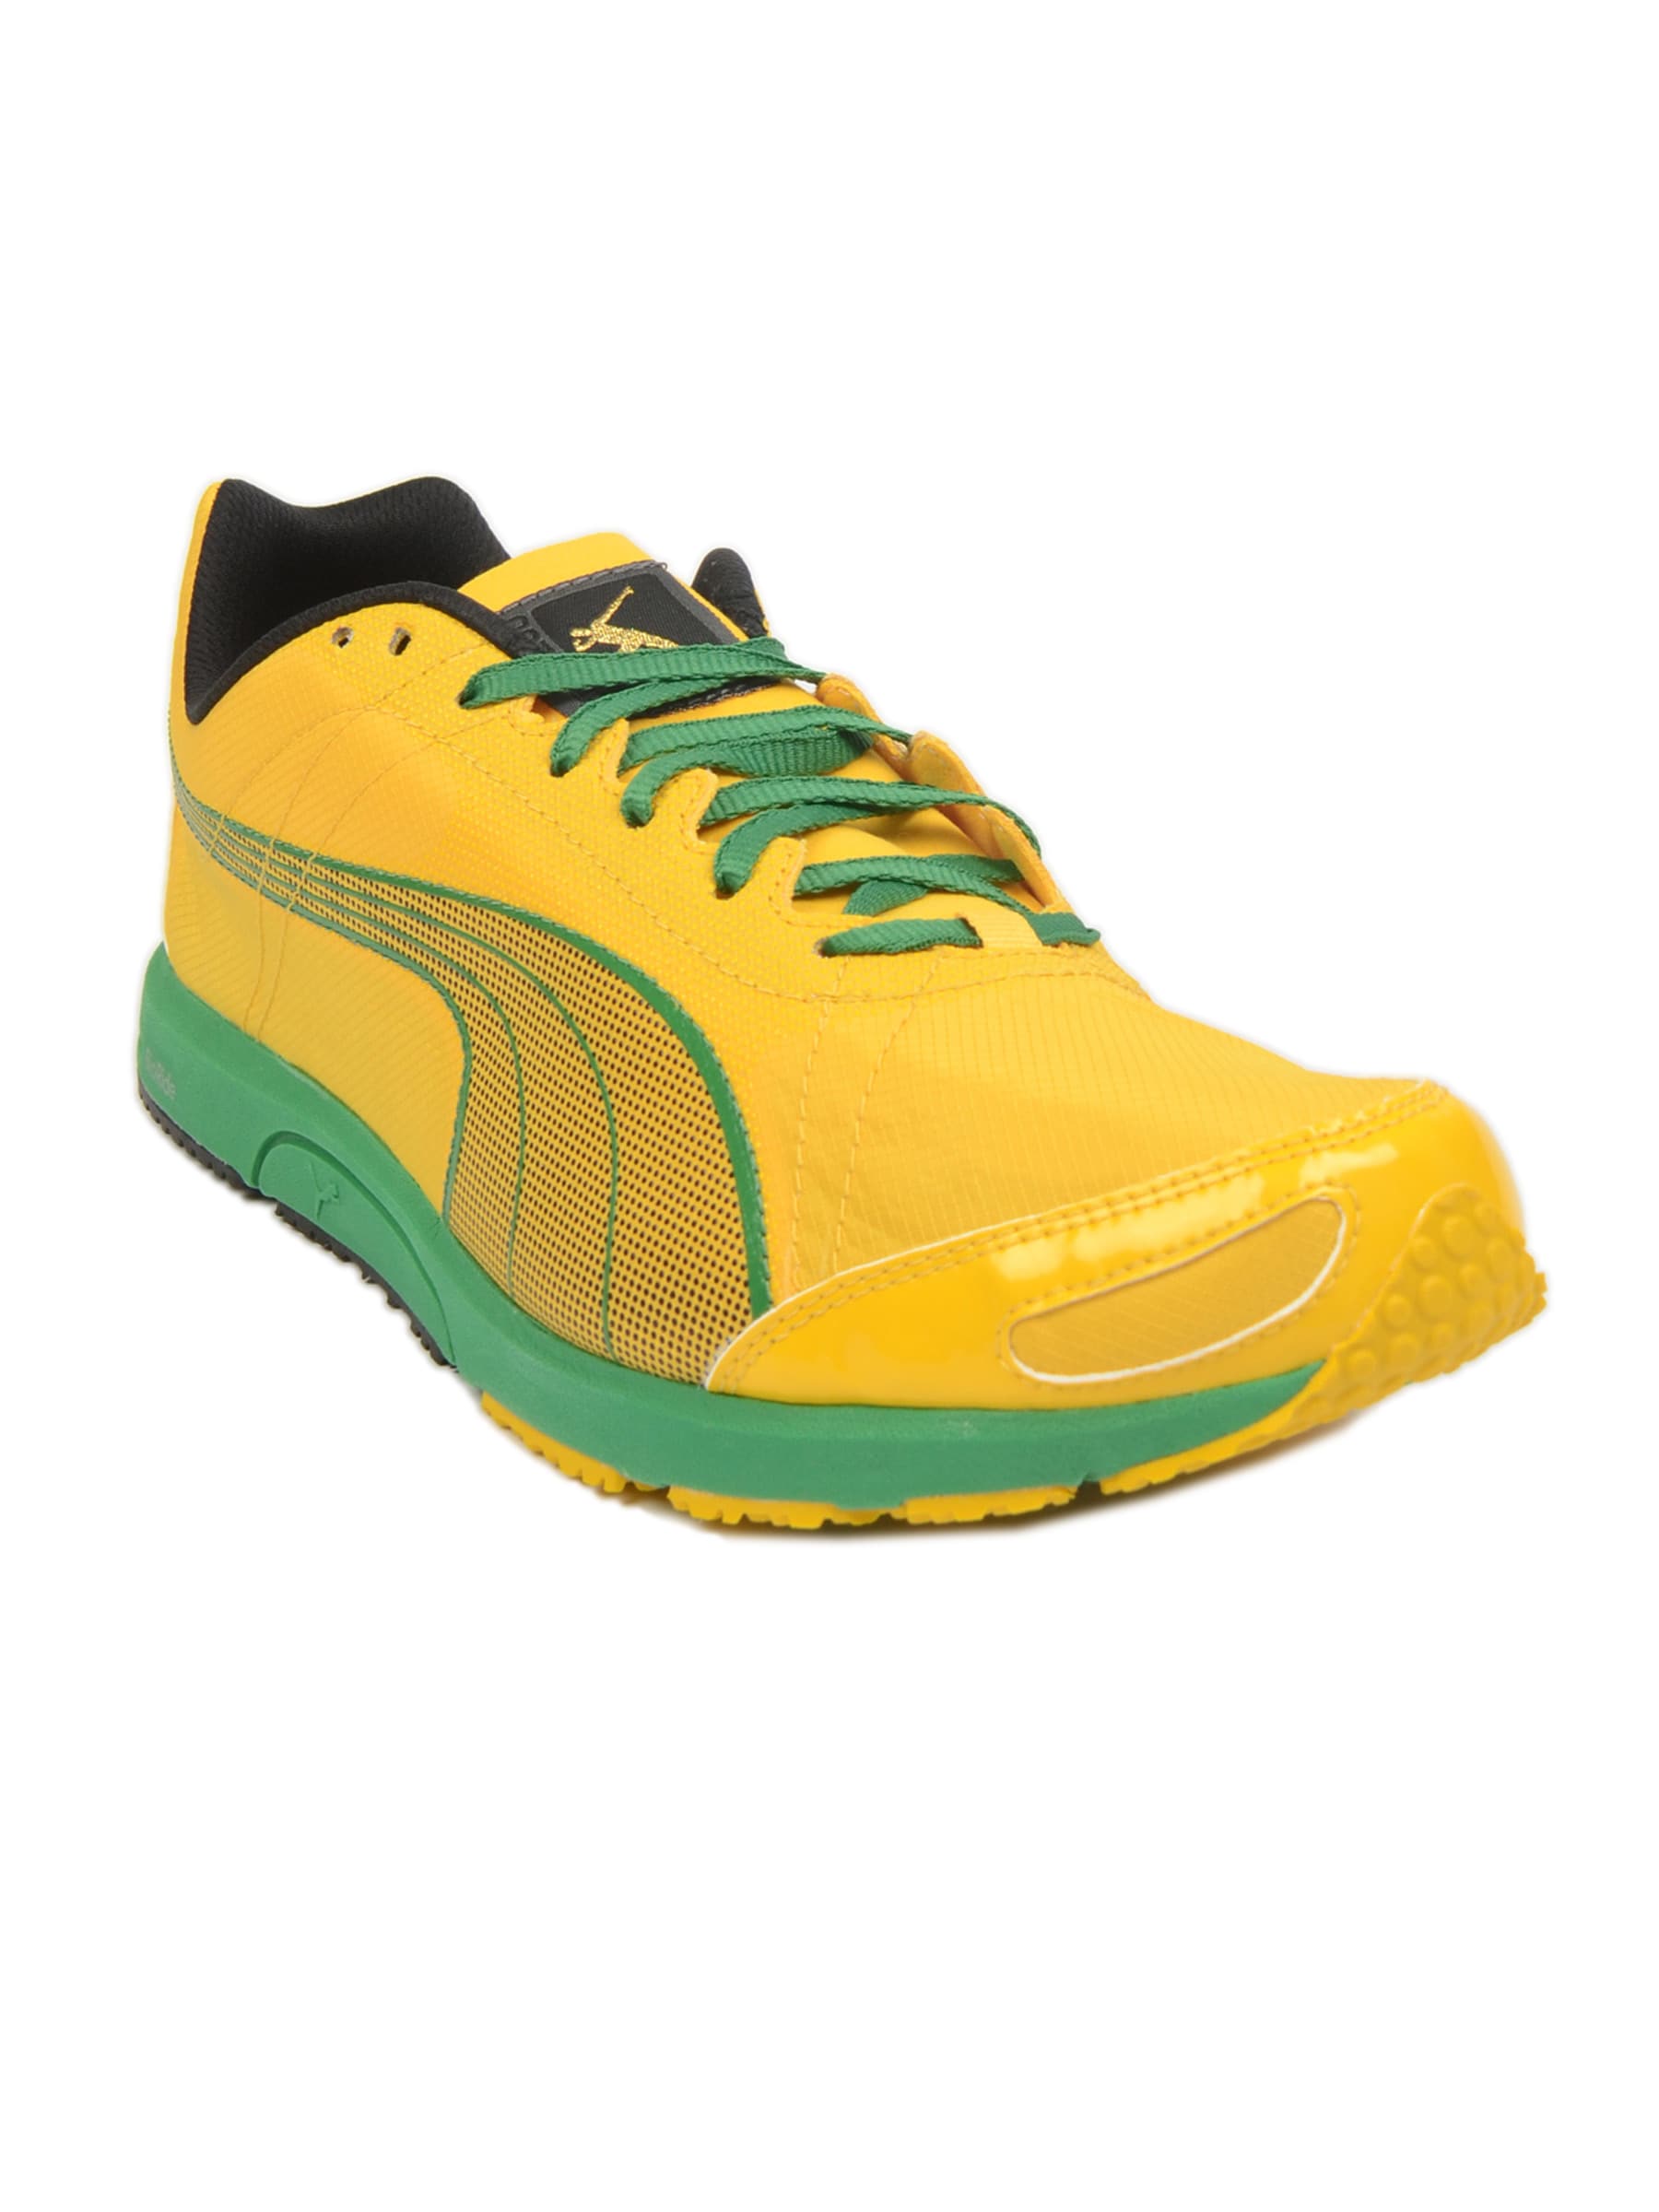 Puma Men BOLT Faas 200 JAM Yellow Sports Shoes